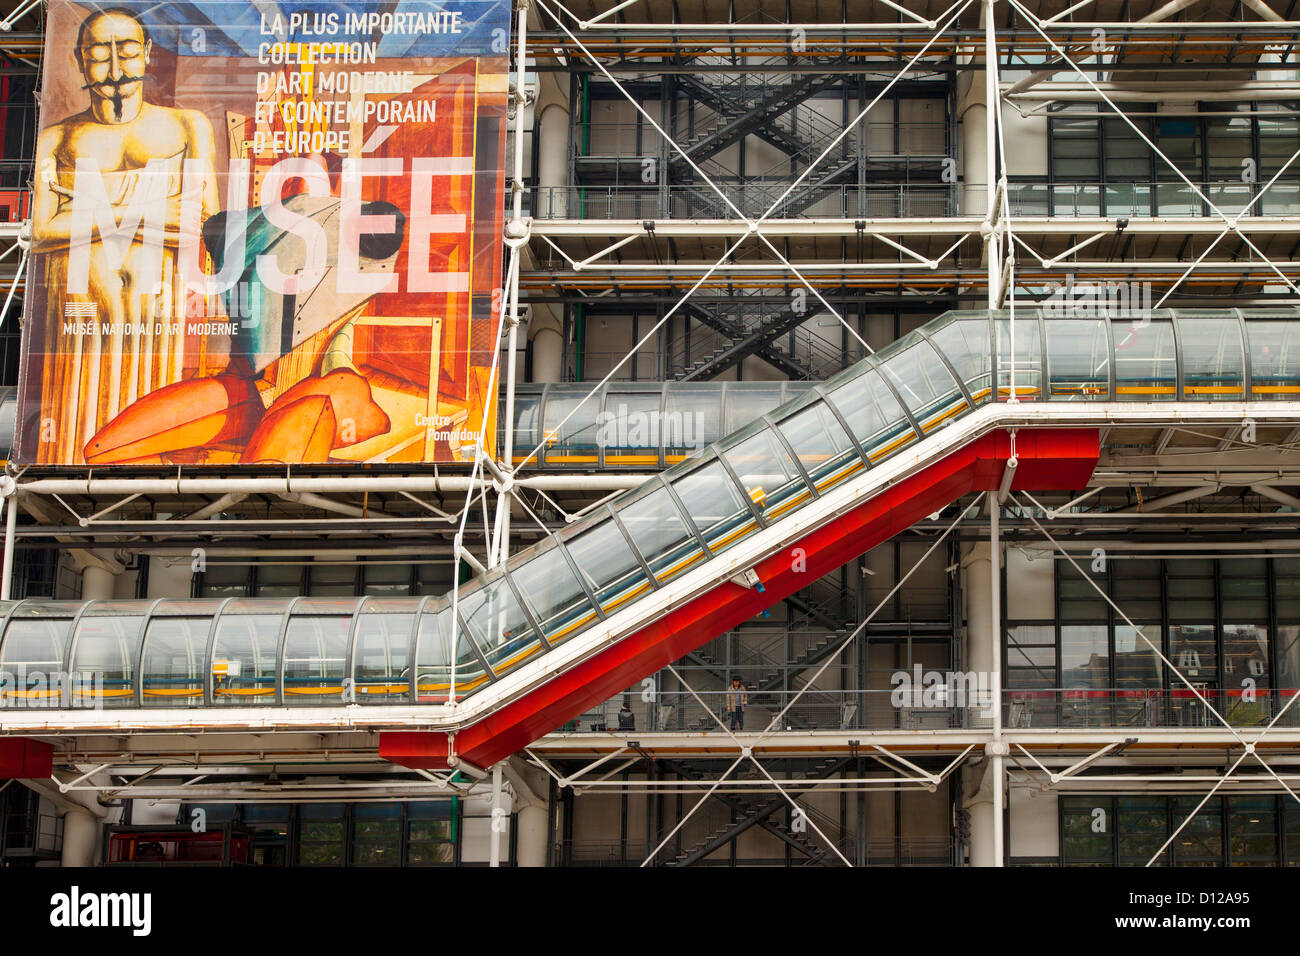 Musee National d'Art Moderne - or Pompidou Center, Paris France Stock Photo